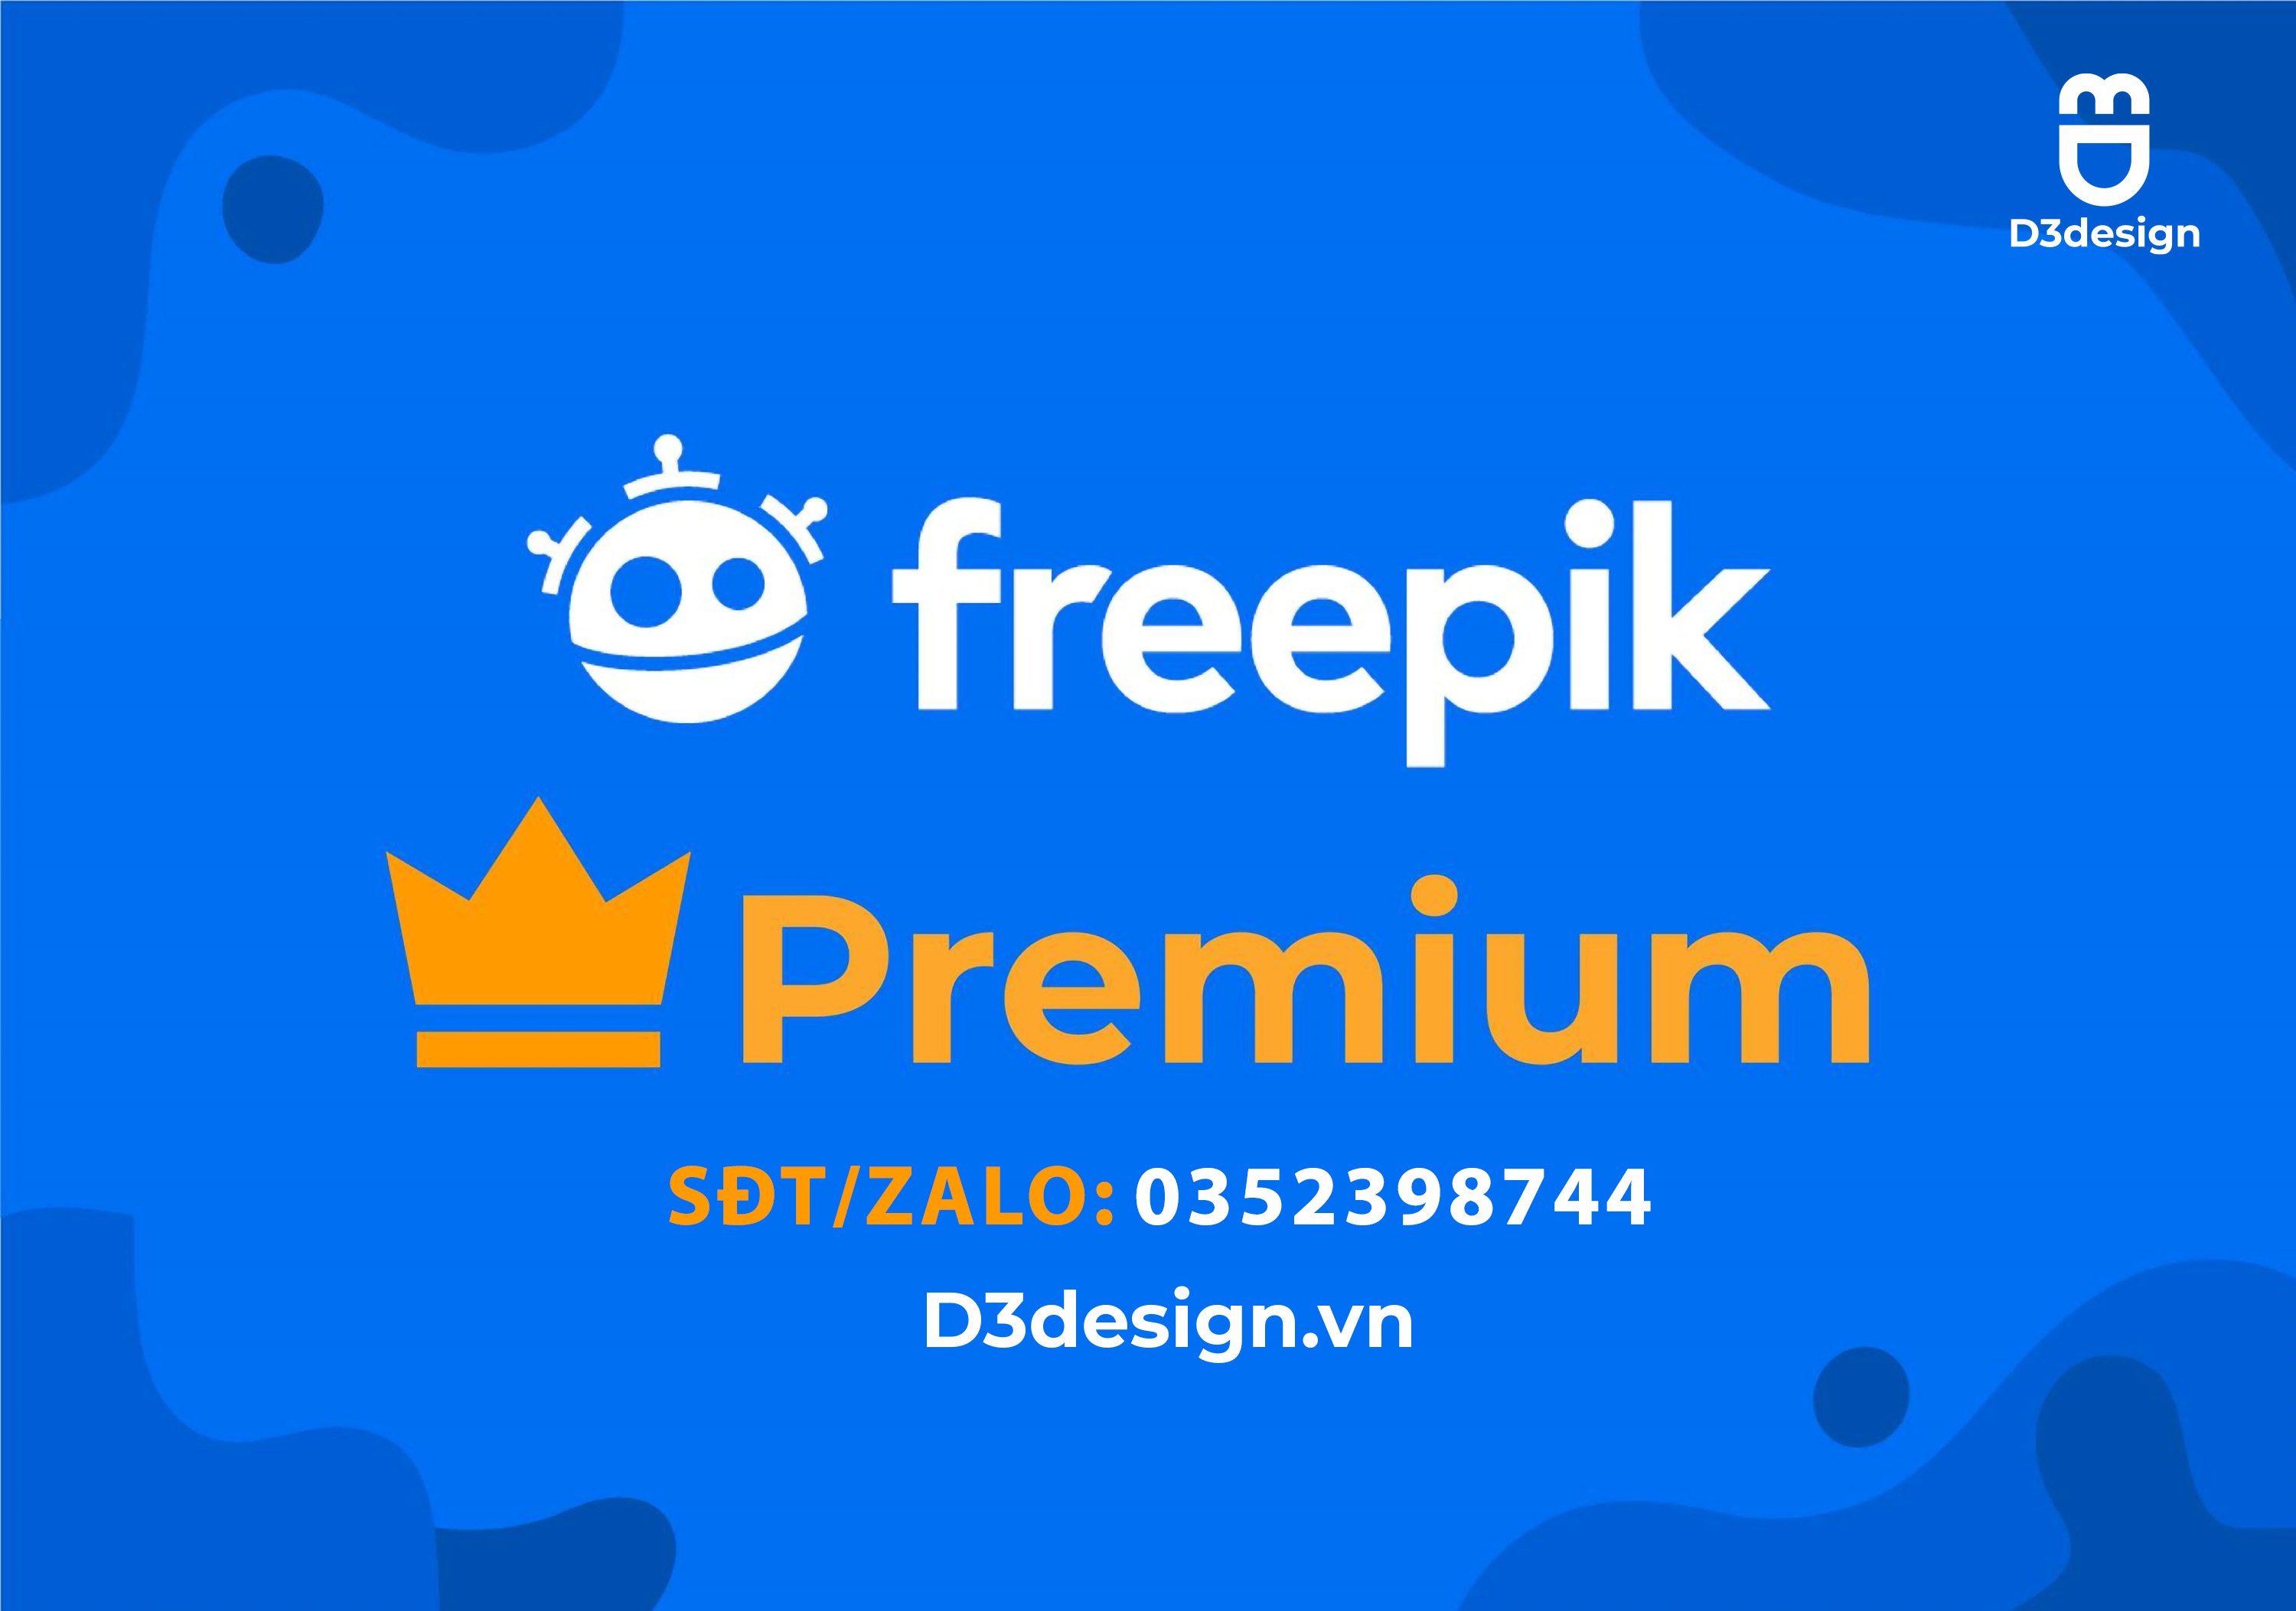 D3Design - Mua Tài Khoản Freepik Premium Giá Rẻ | D3design